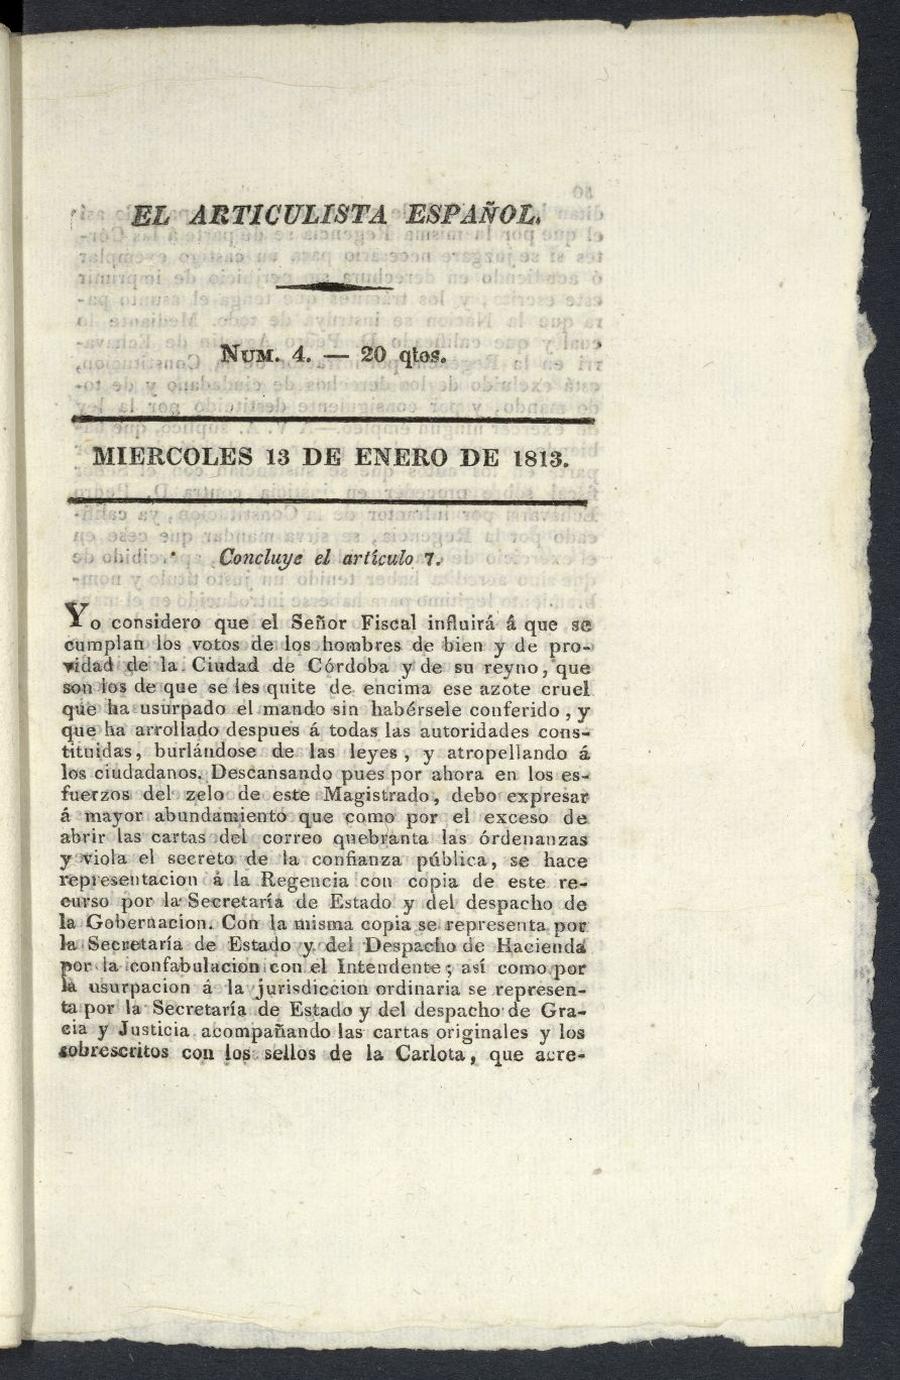 El Articulista Espaol, mircoles 13 de enero de 1813